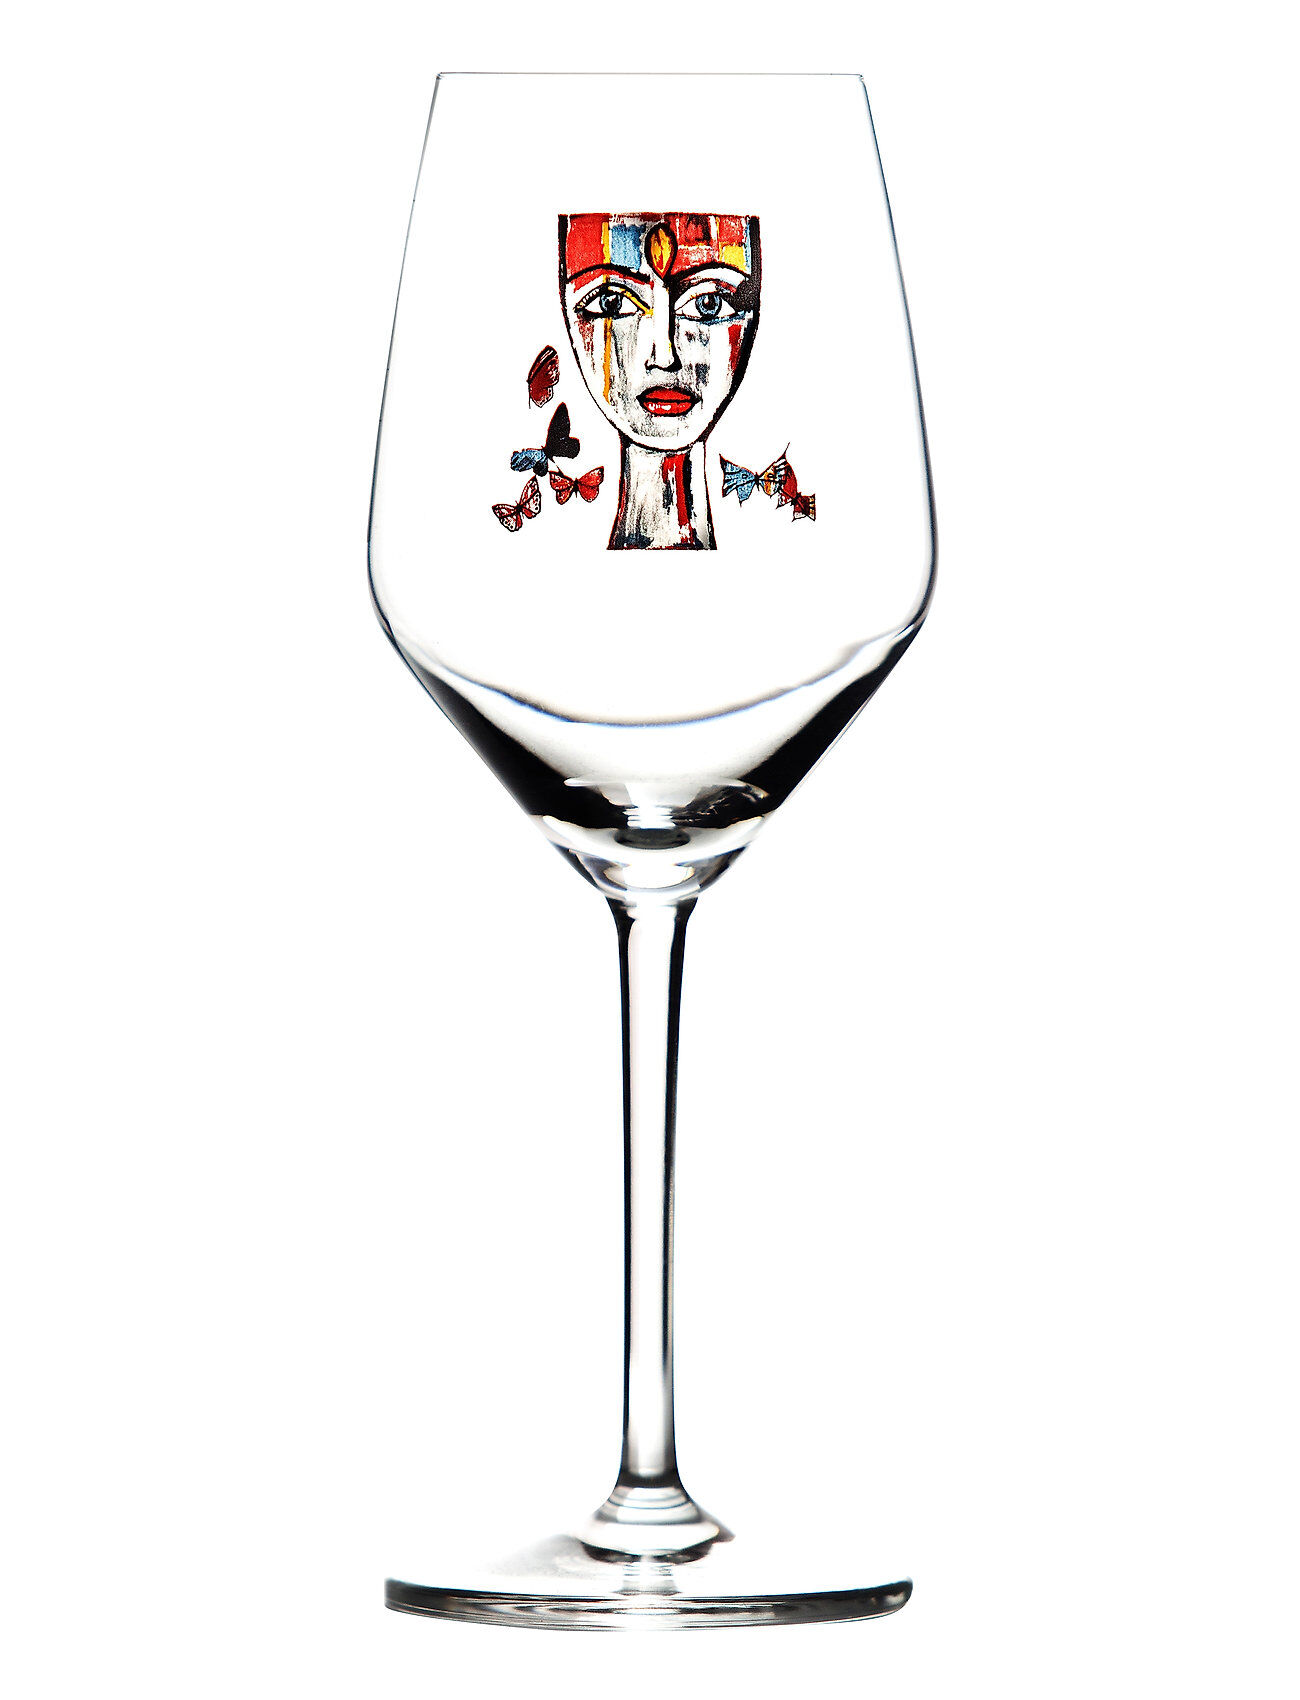 Carolina Gynning Butterfly Messenger Home Tableware Glass Wine Glass Red Wine Glasses Nude Carolina Gynning